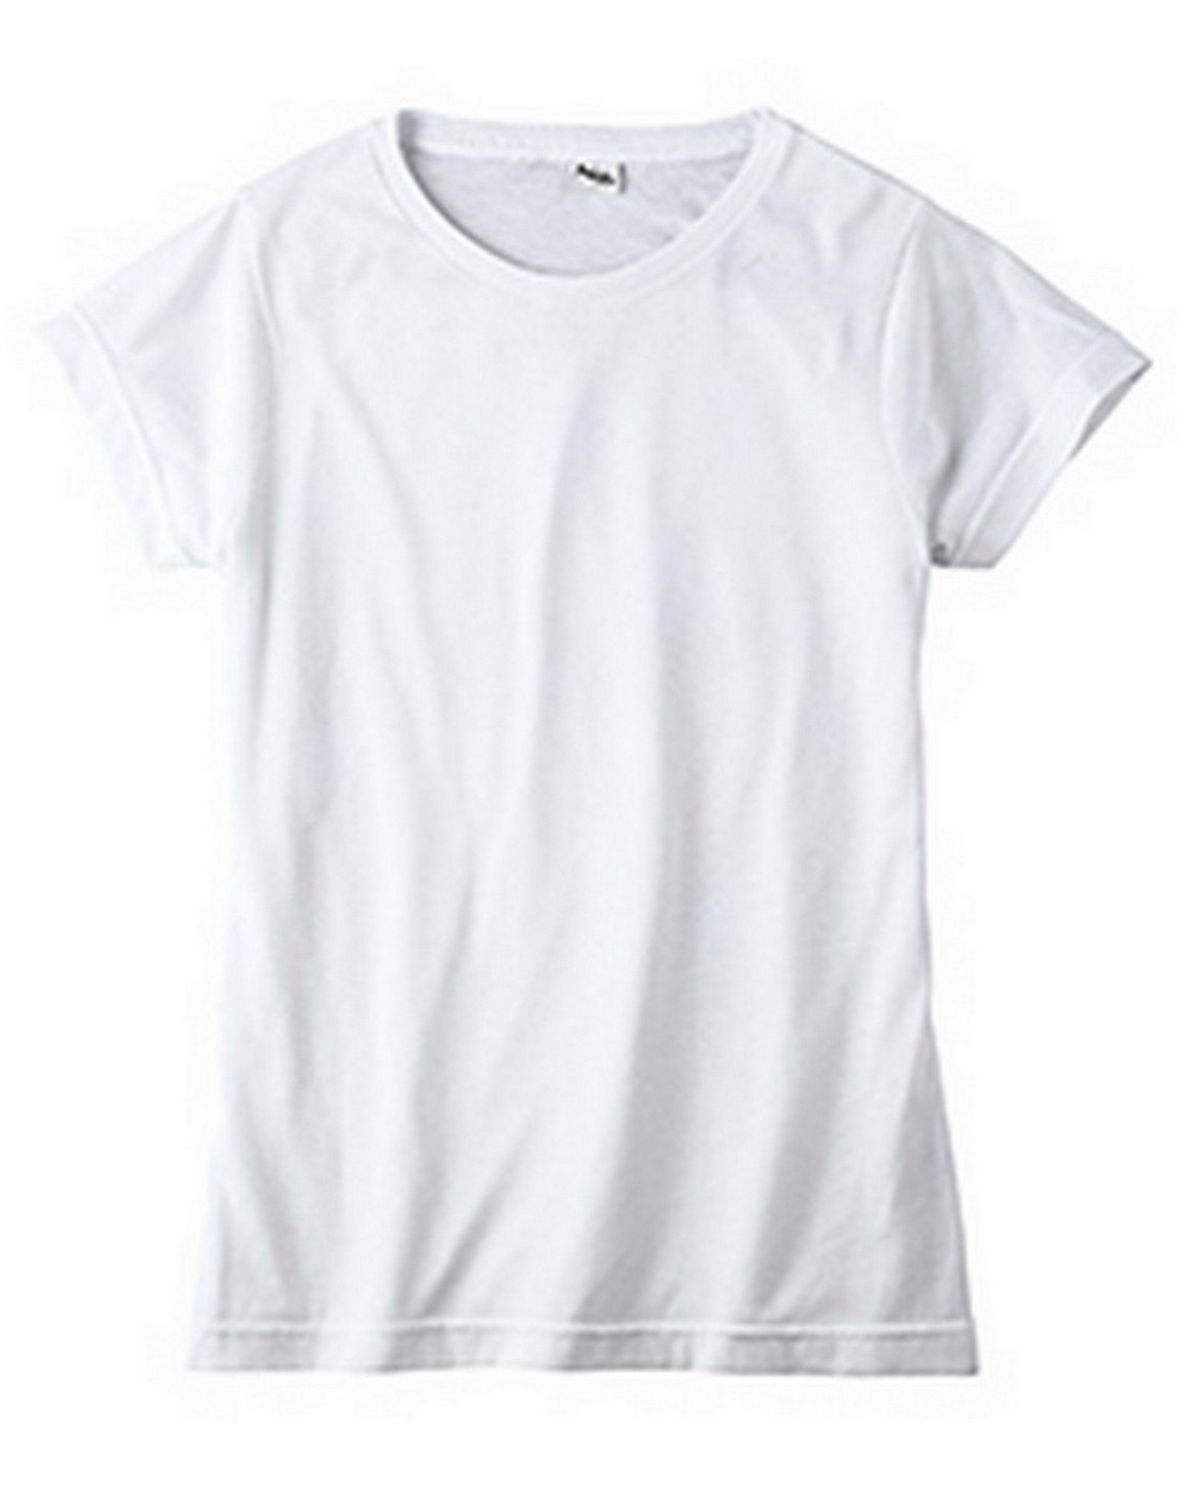 Buy SubliVie 1510 Ladies Polyester T-Shirt